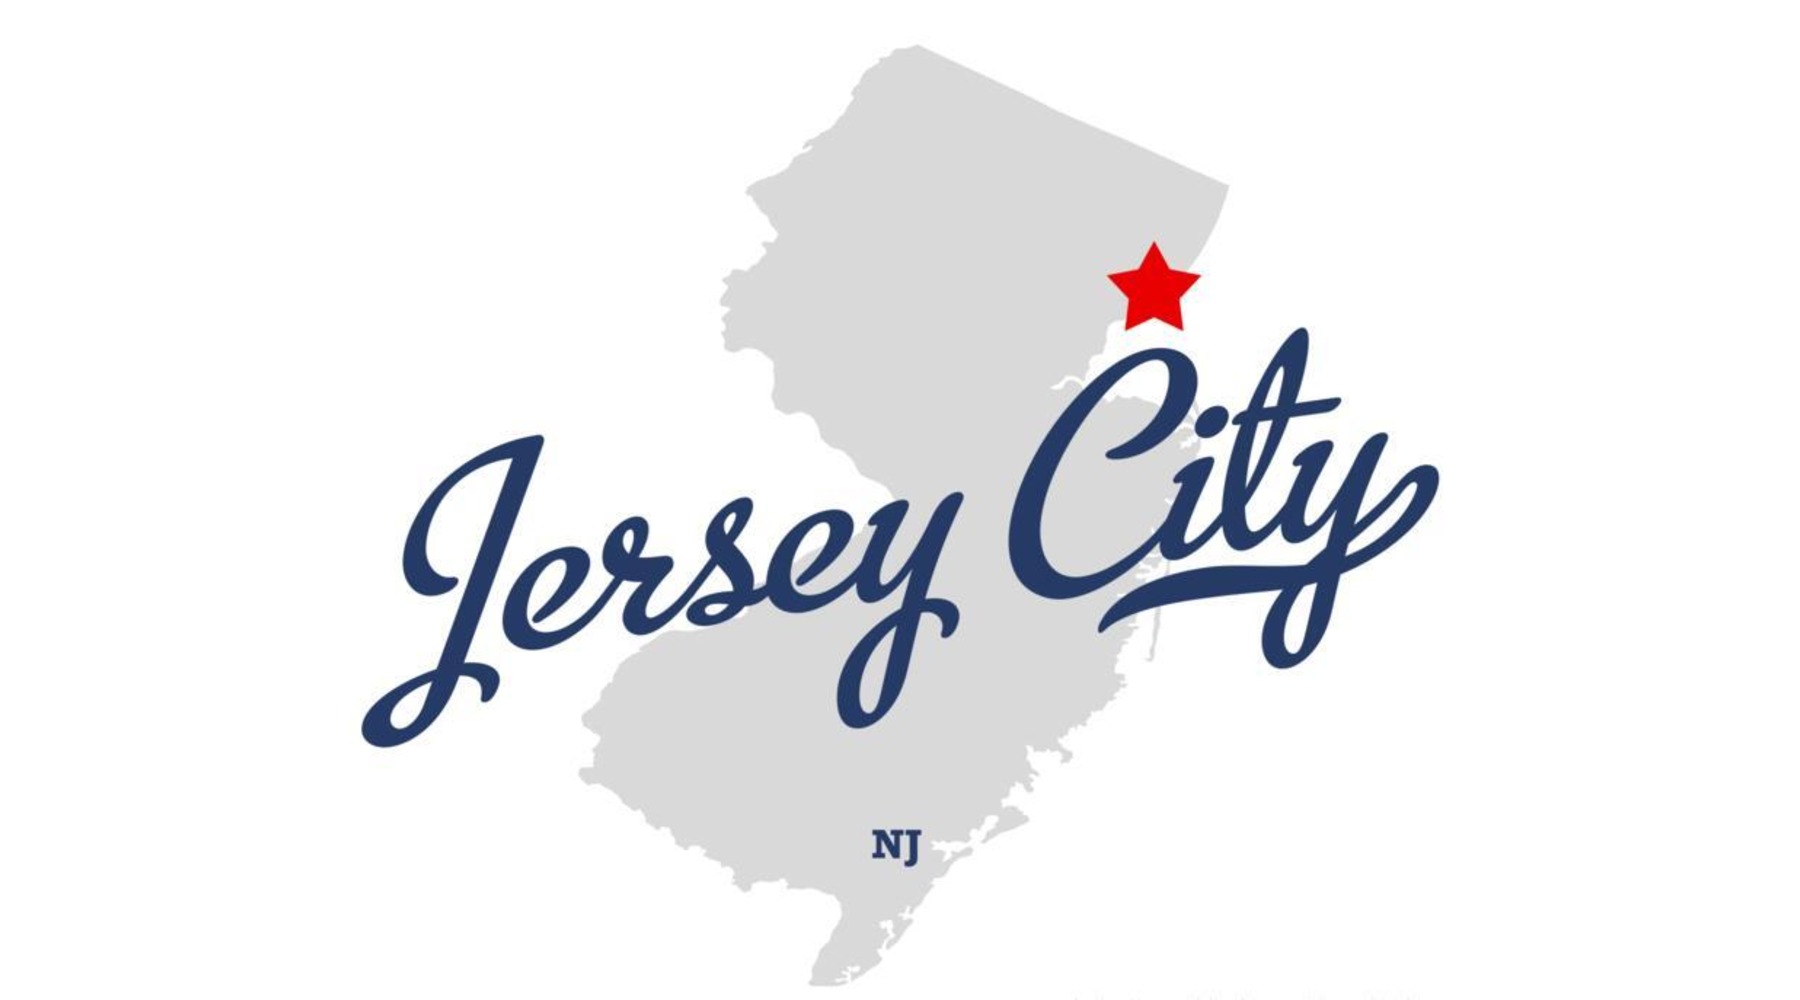 Jersey City, 07302